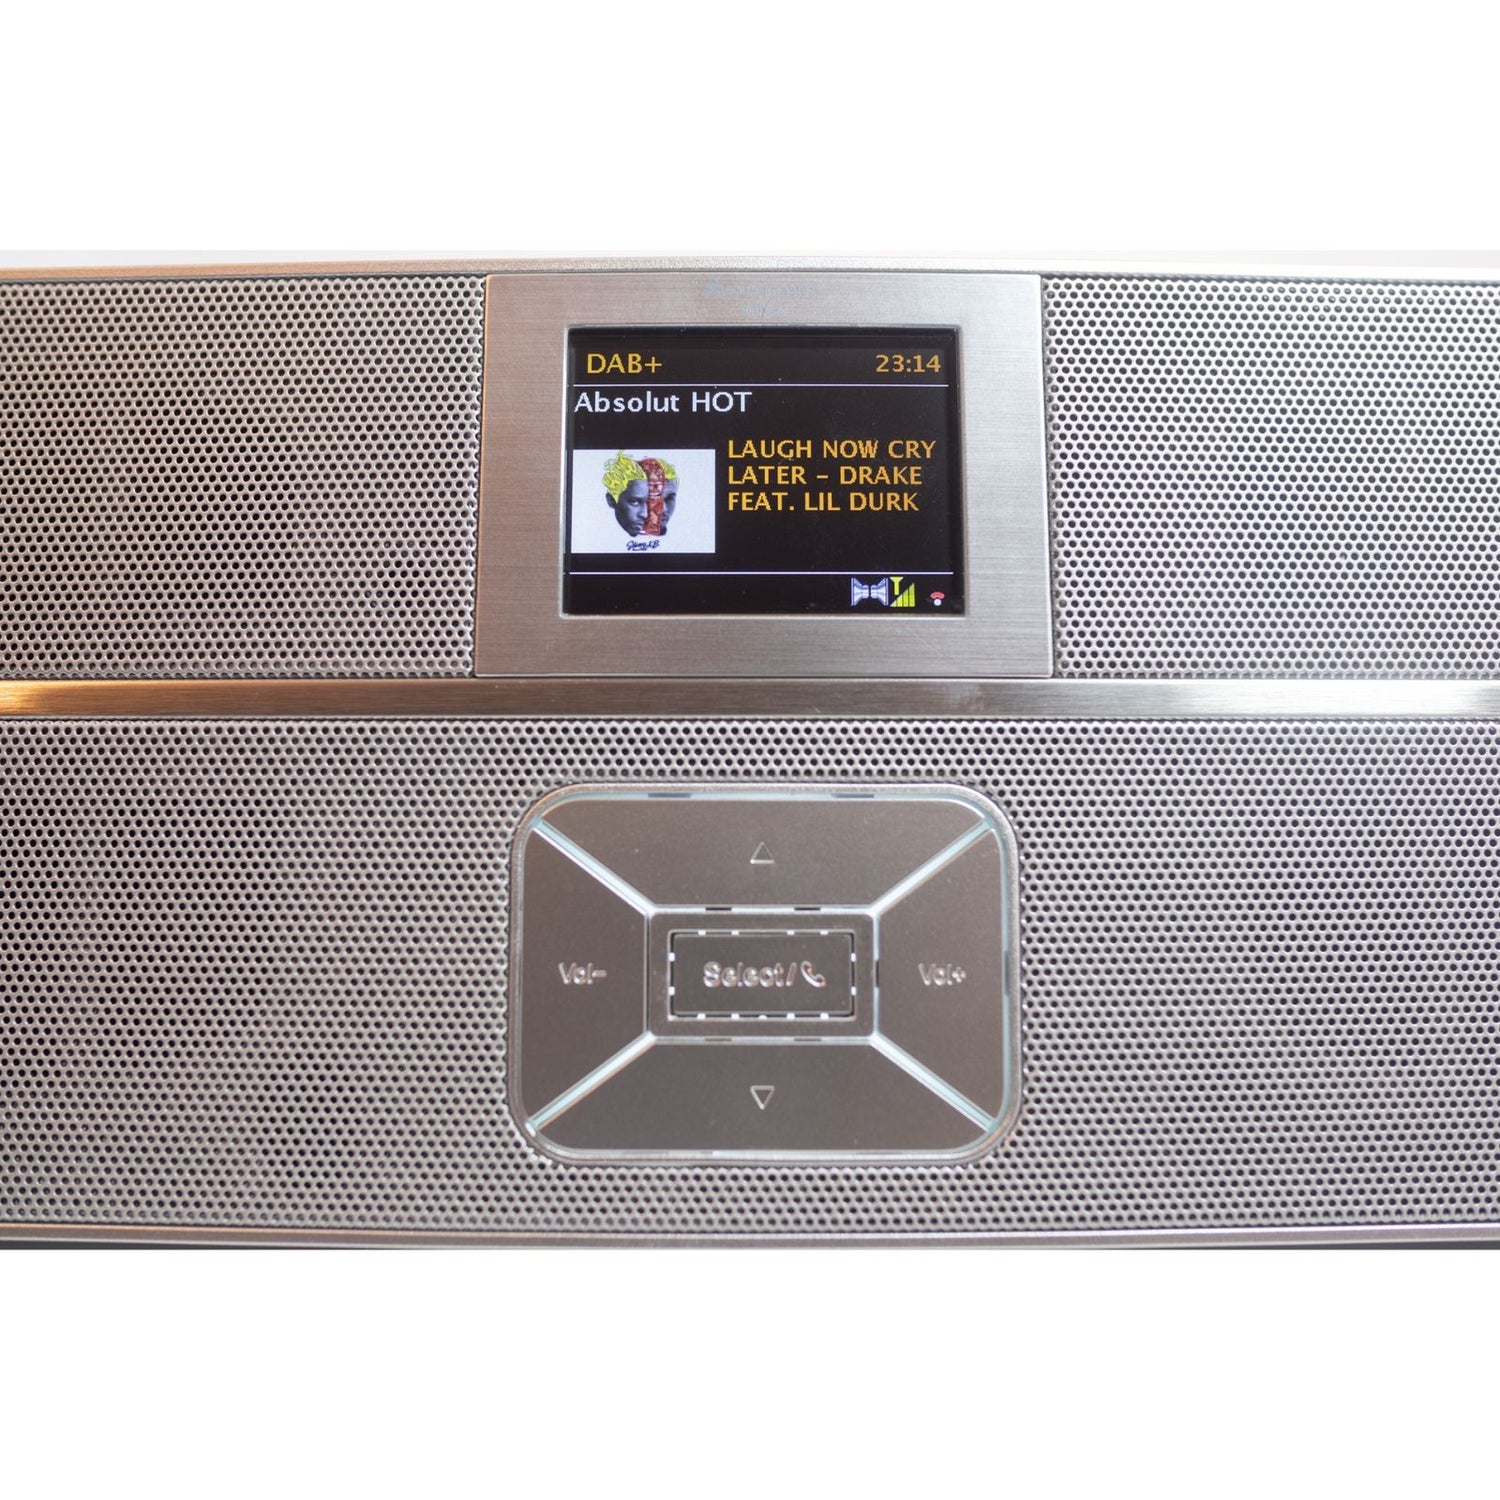 Soundmaster Highline IR3300SI Internet radio DAB+ digital radio network player FM radio USB Bluetooth Alexa capable